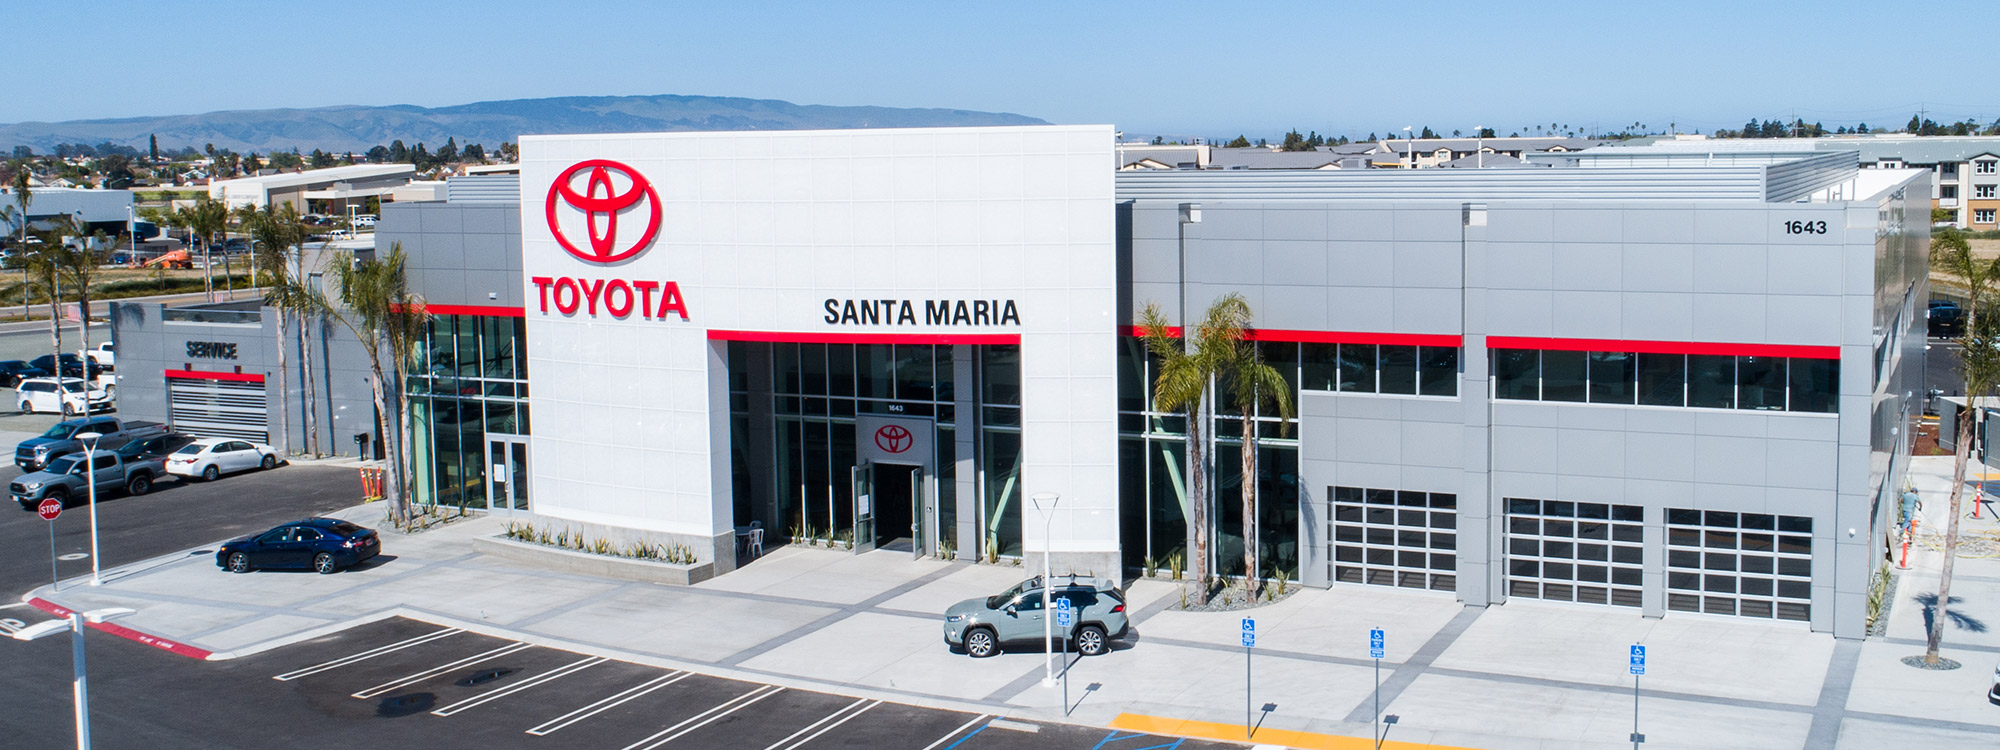 Toyota of Santa Maria - General Contractor California - Building Builder Construction - JW Design & Construction